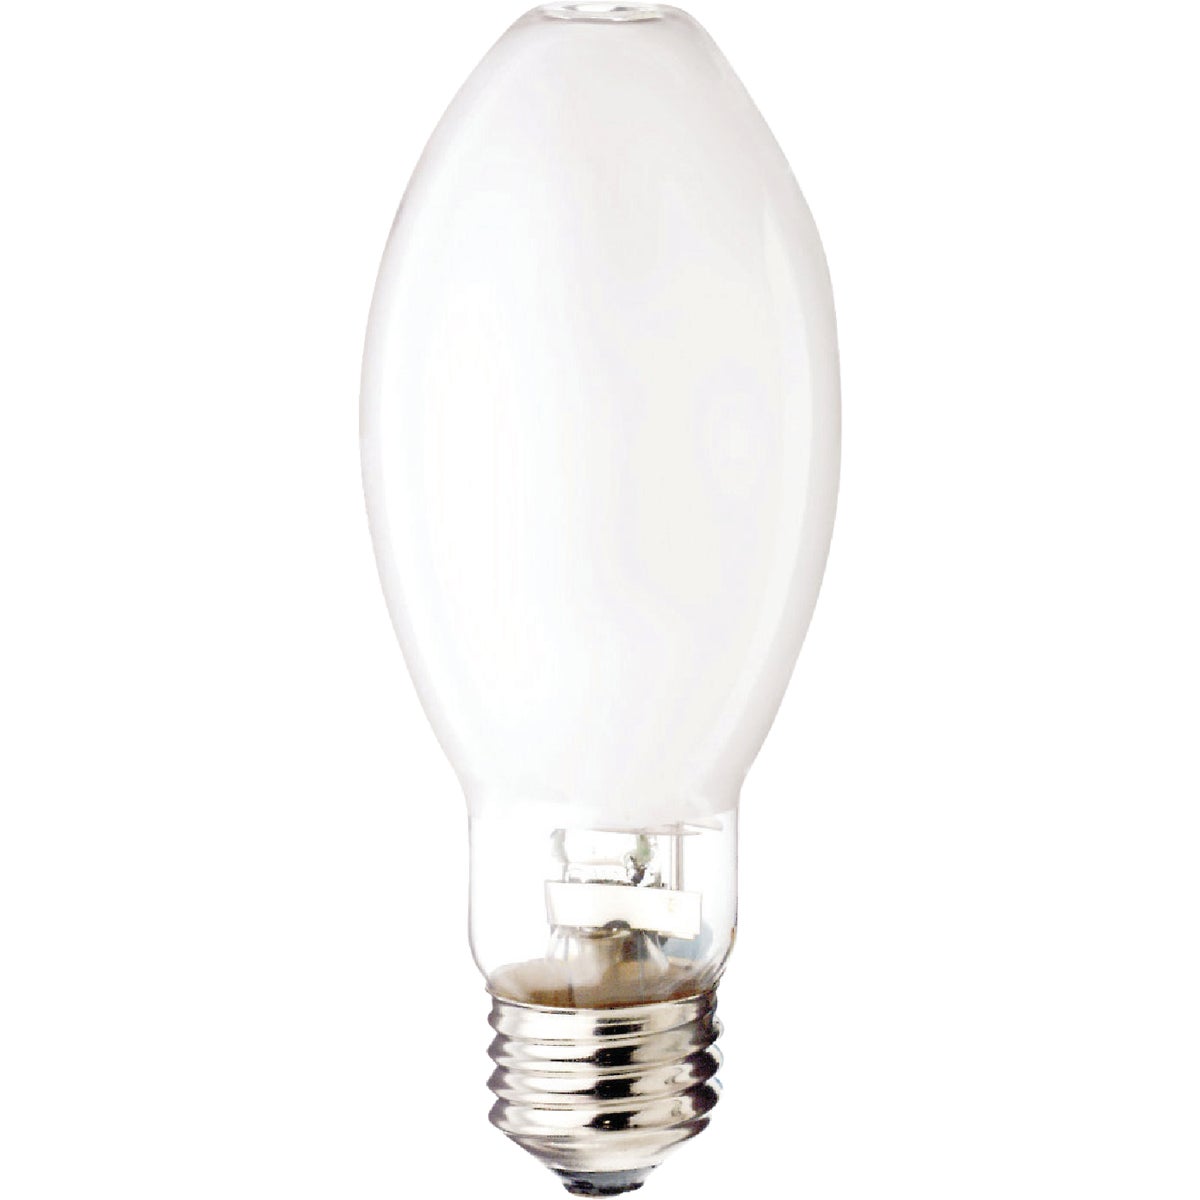 Item 557250, ED17 medium base metal halide HID (high-intensity discharge) light bulb.